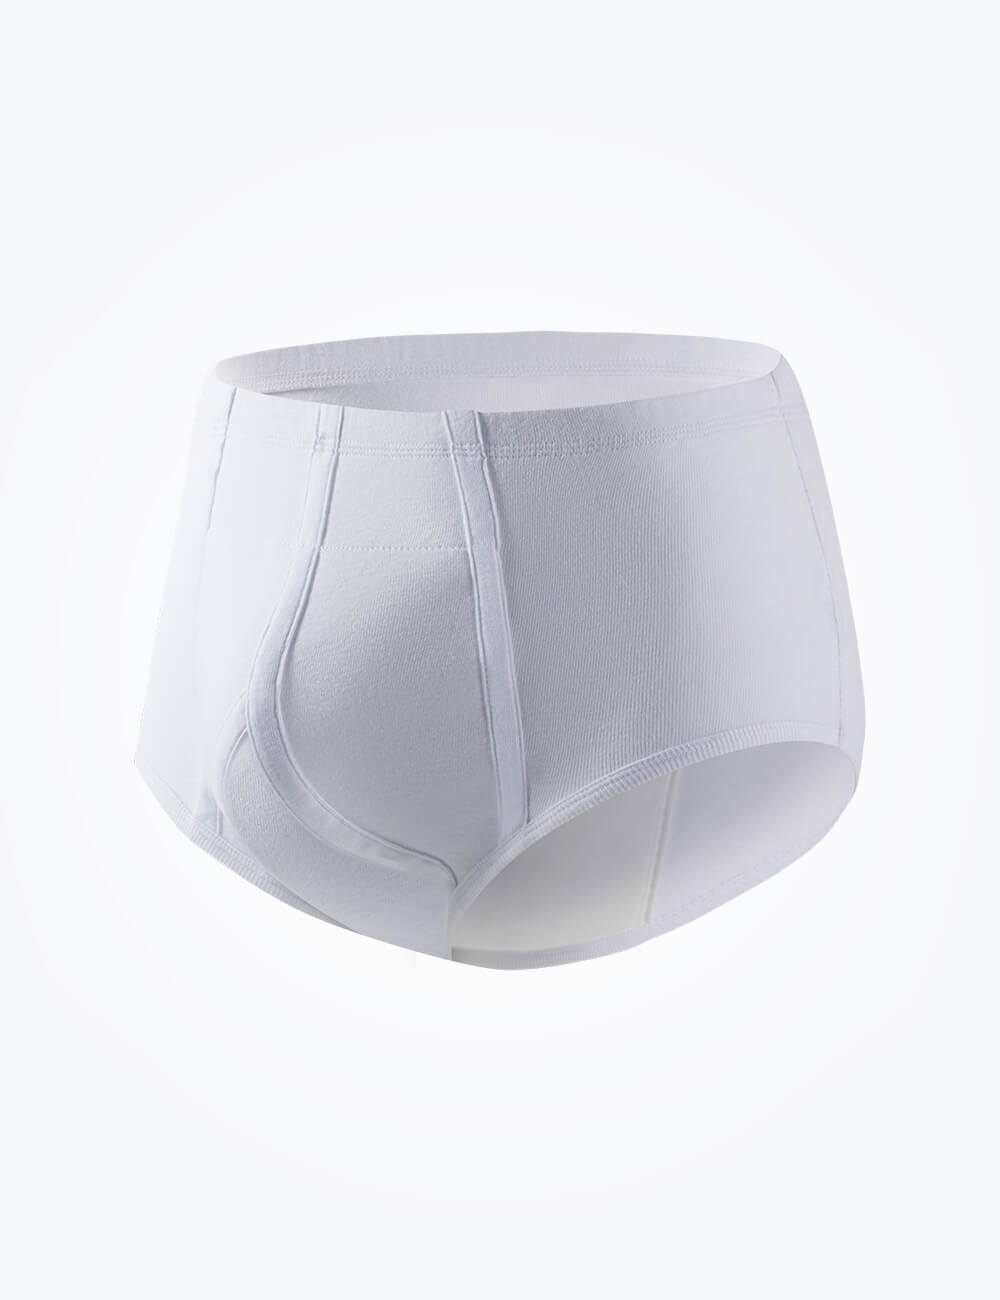 Washable Incontinence Pants vs Disposable Incontinence Pants